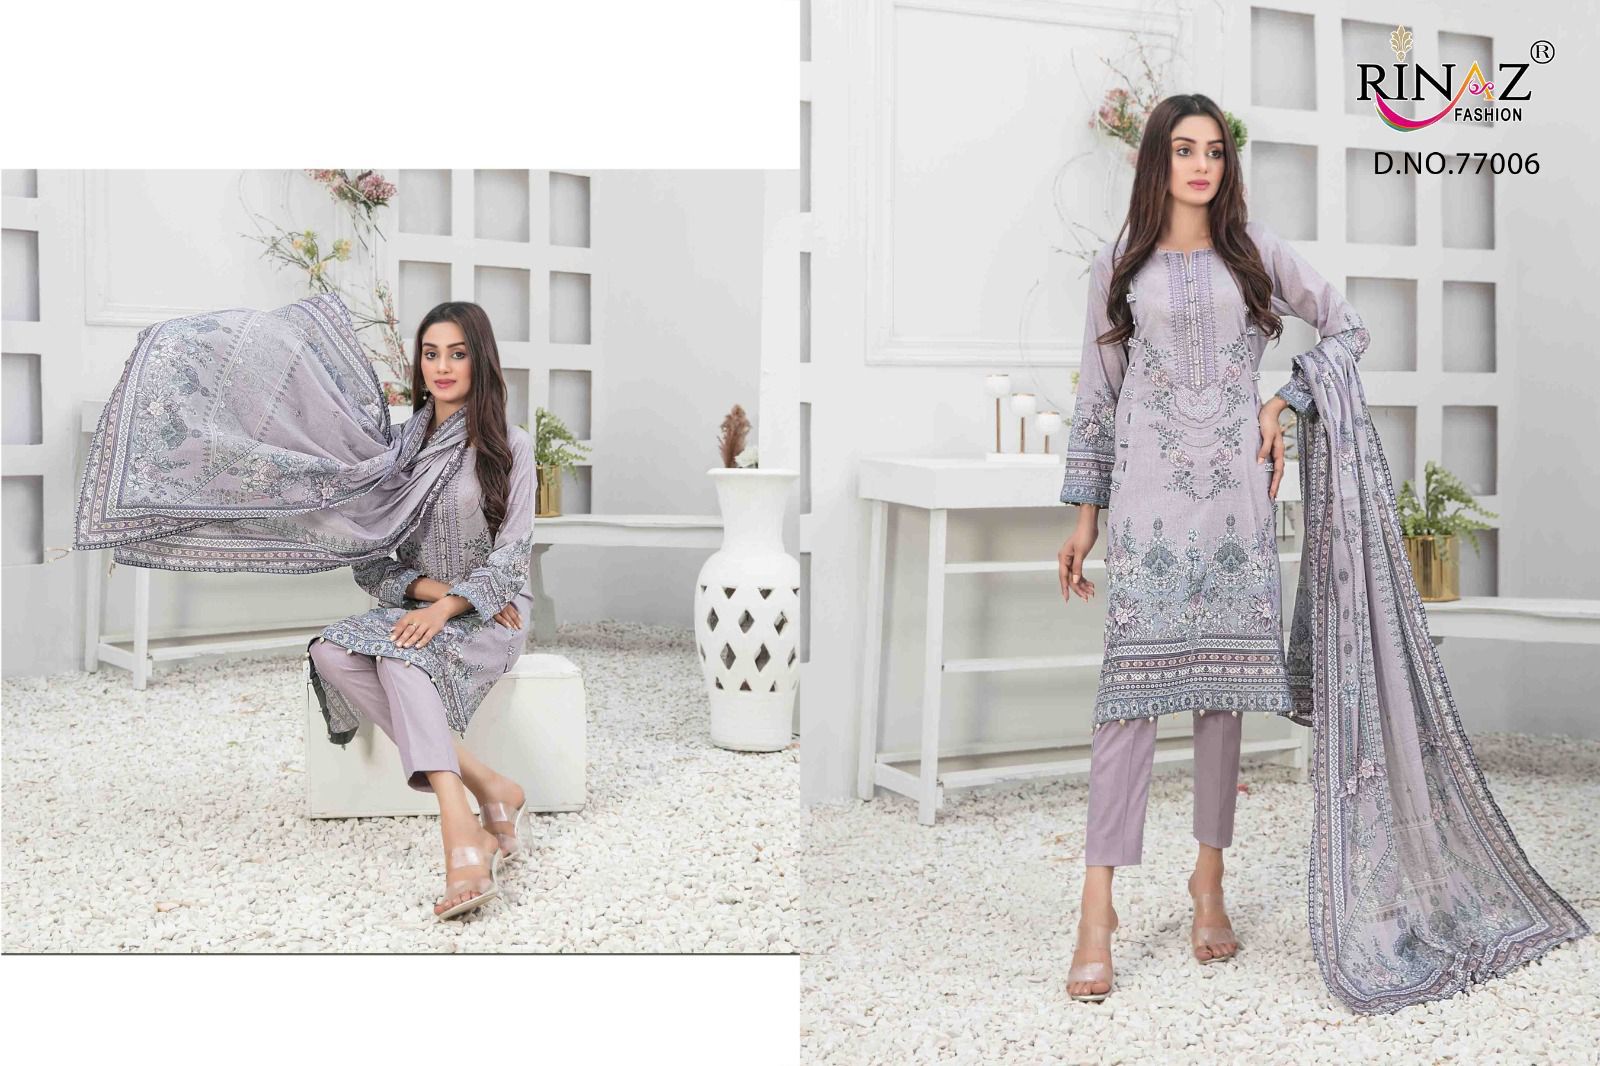 Rinaz fashion mehmal vol 2 cambric cotton pakistani salwar suits wholesaler surat chiffon dupatta - jilaniwholesalesuit